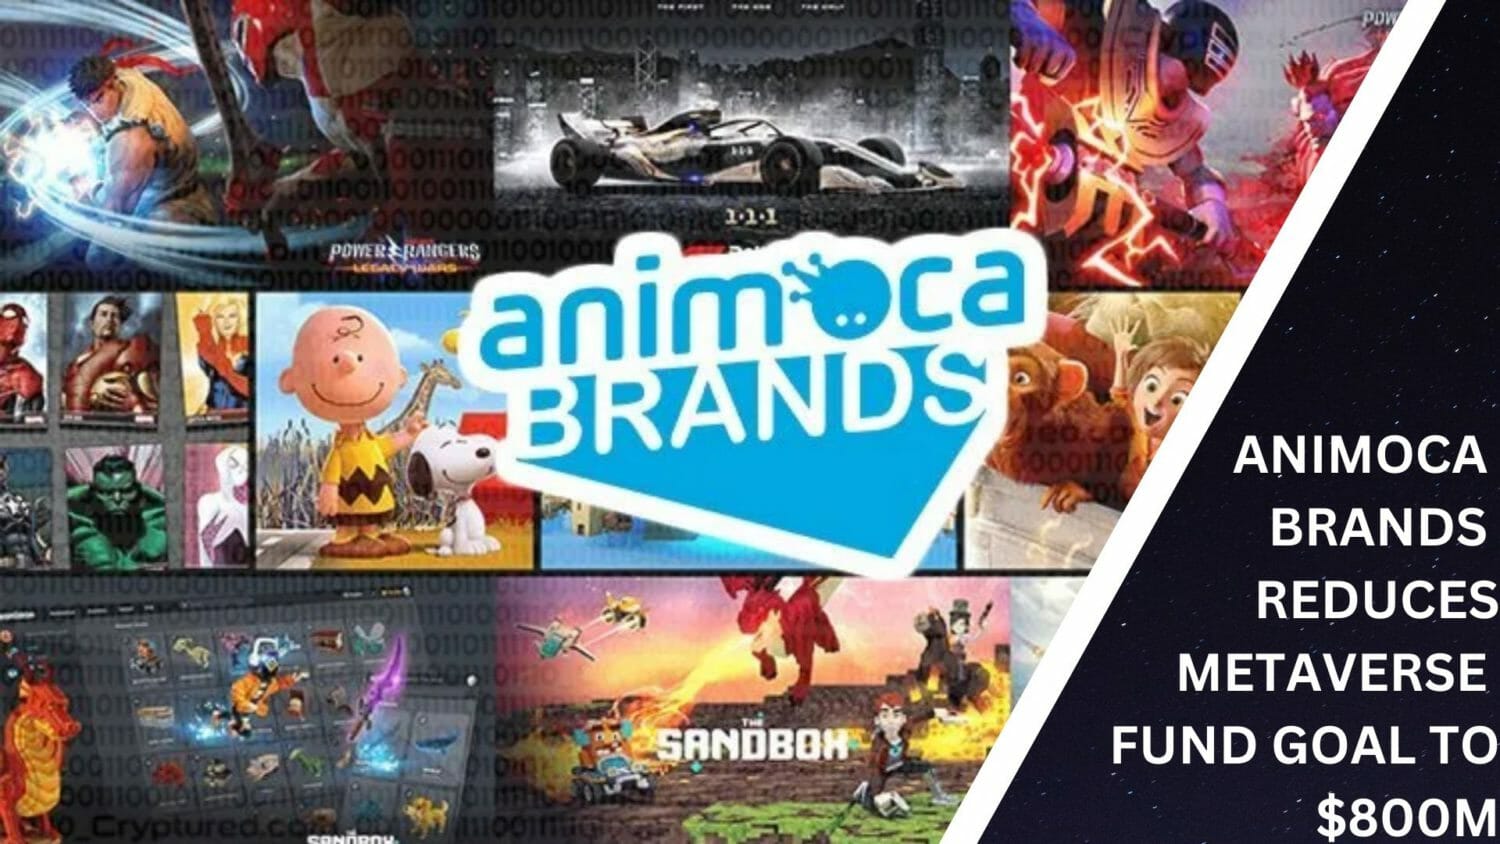 Animoca Brands Reduces Metaverse Fund Goal To $800M